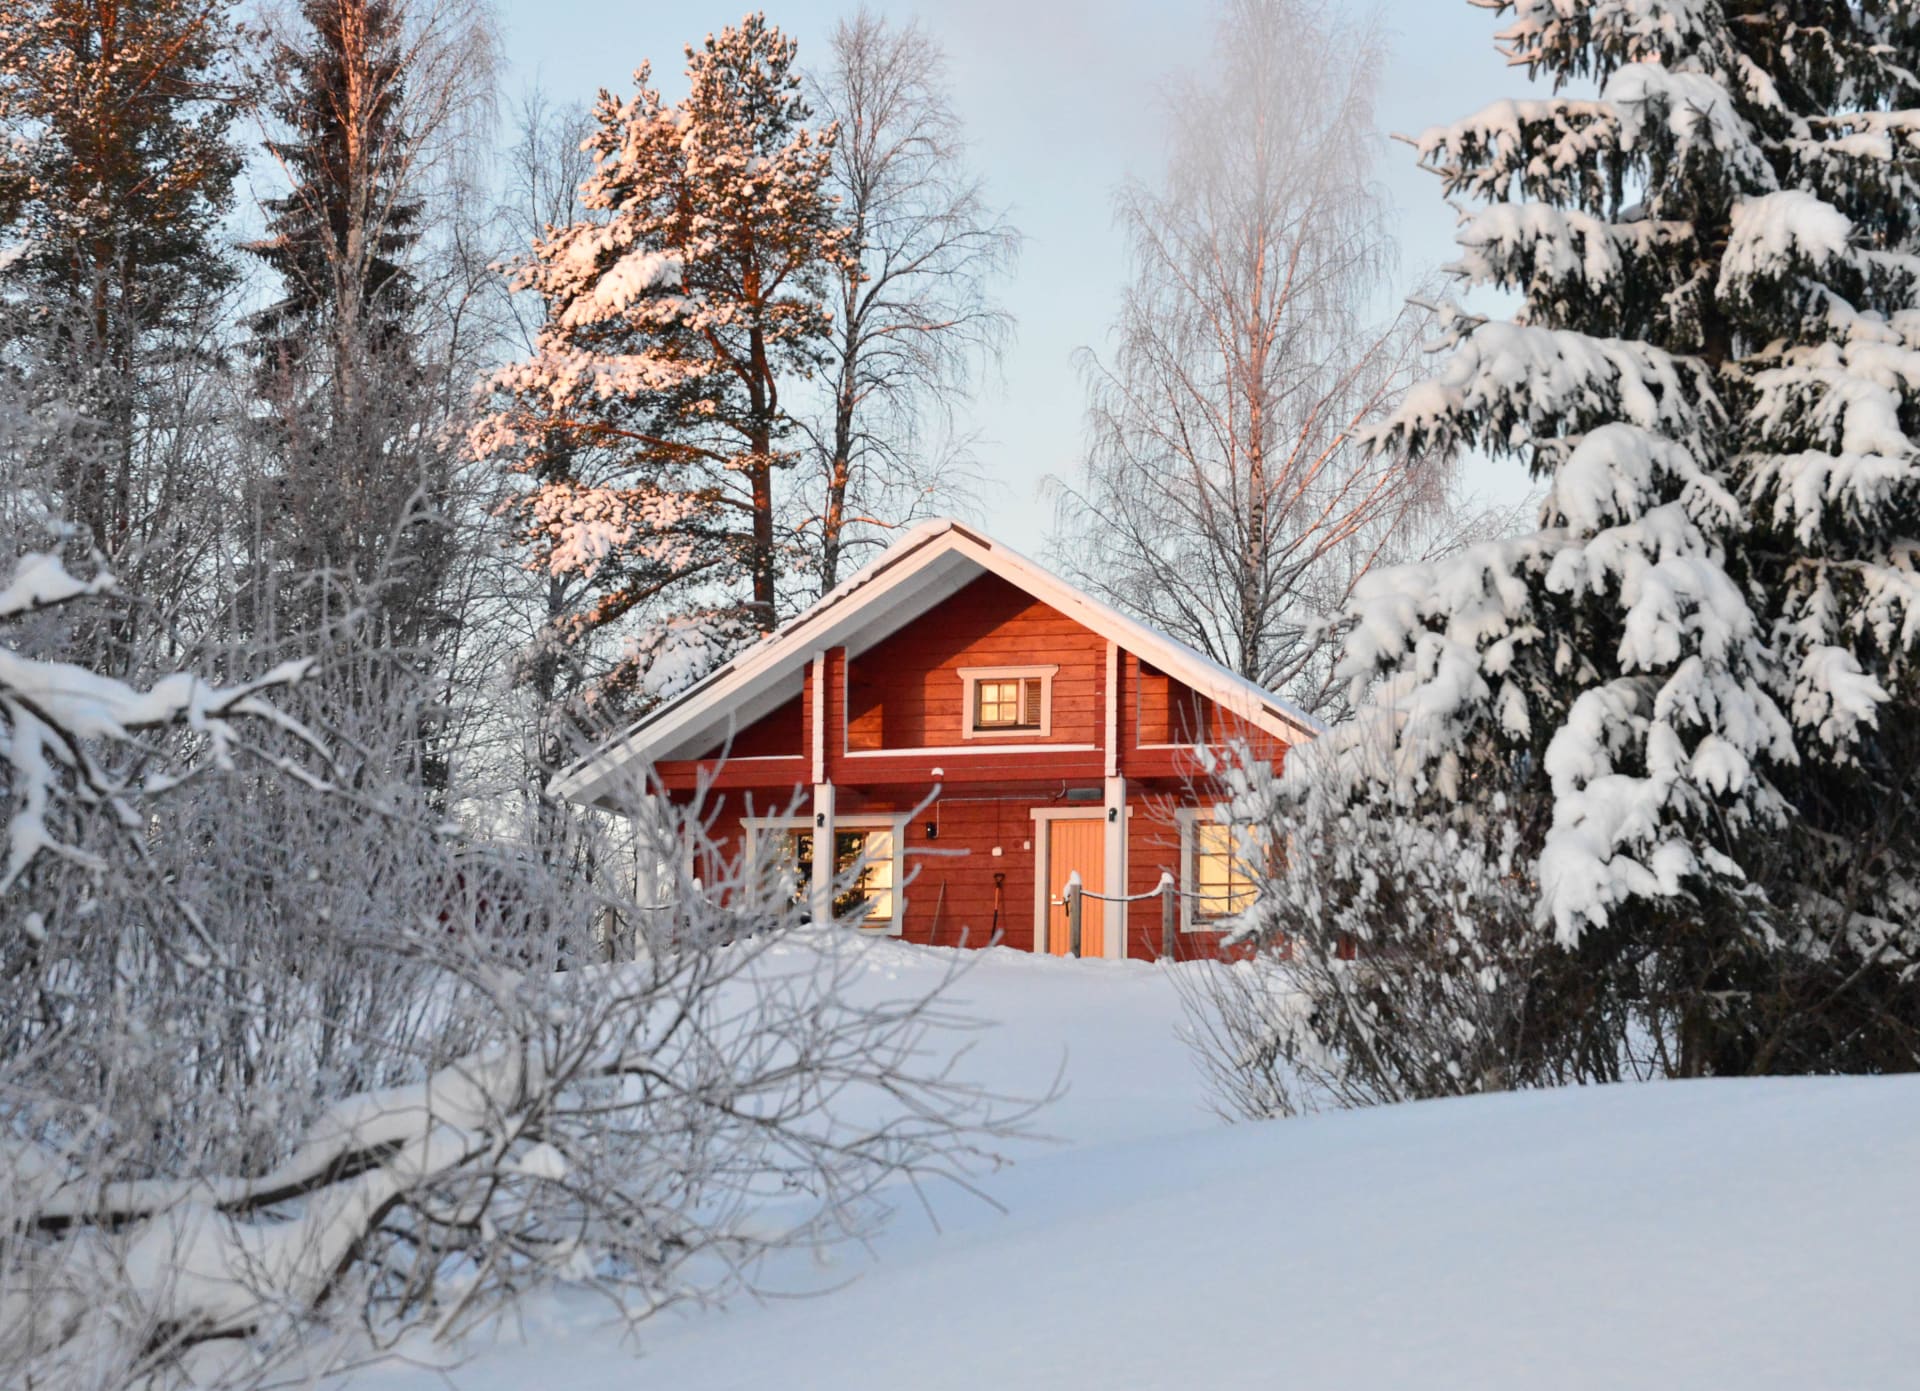 Cottage in winter season